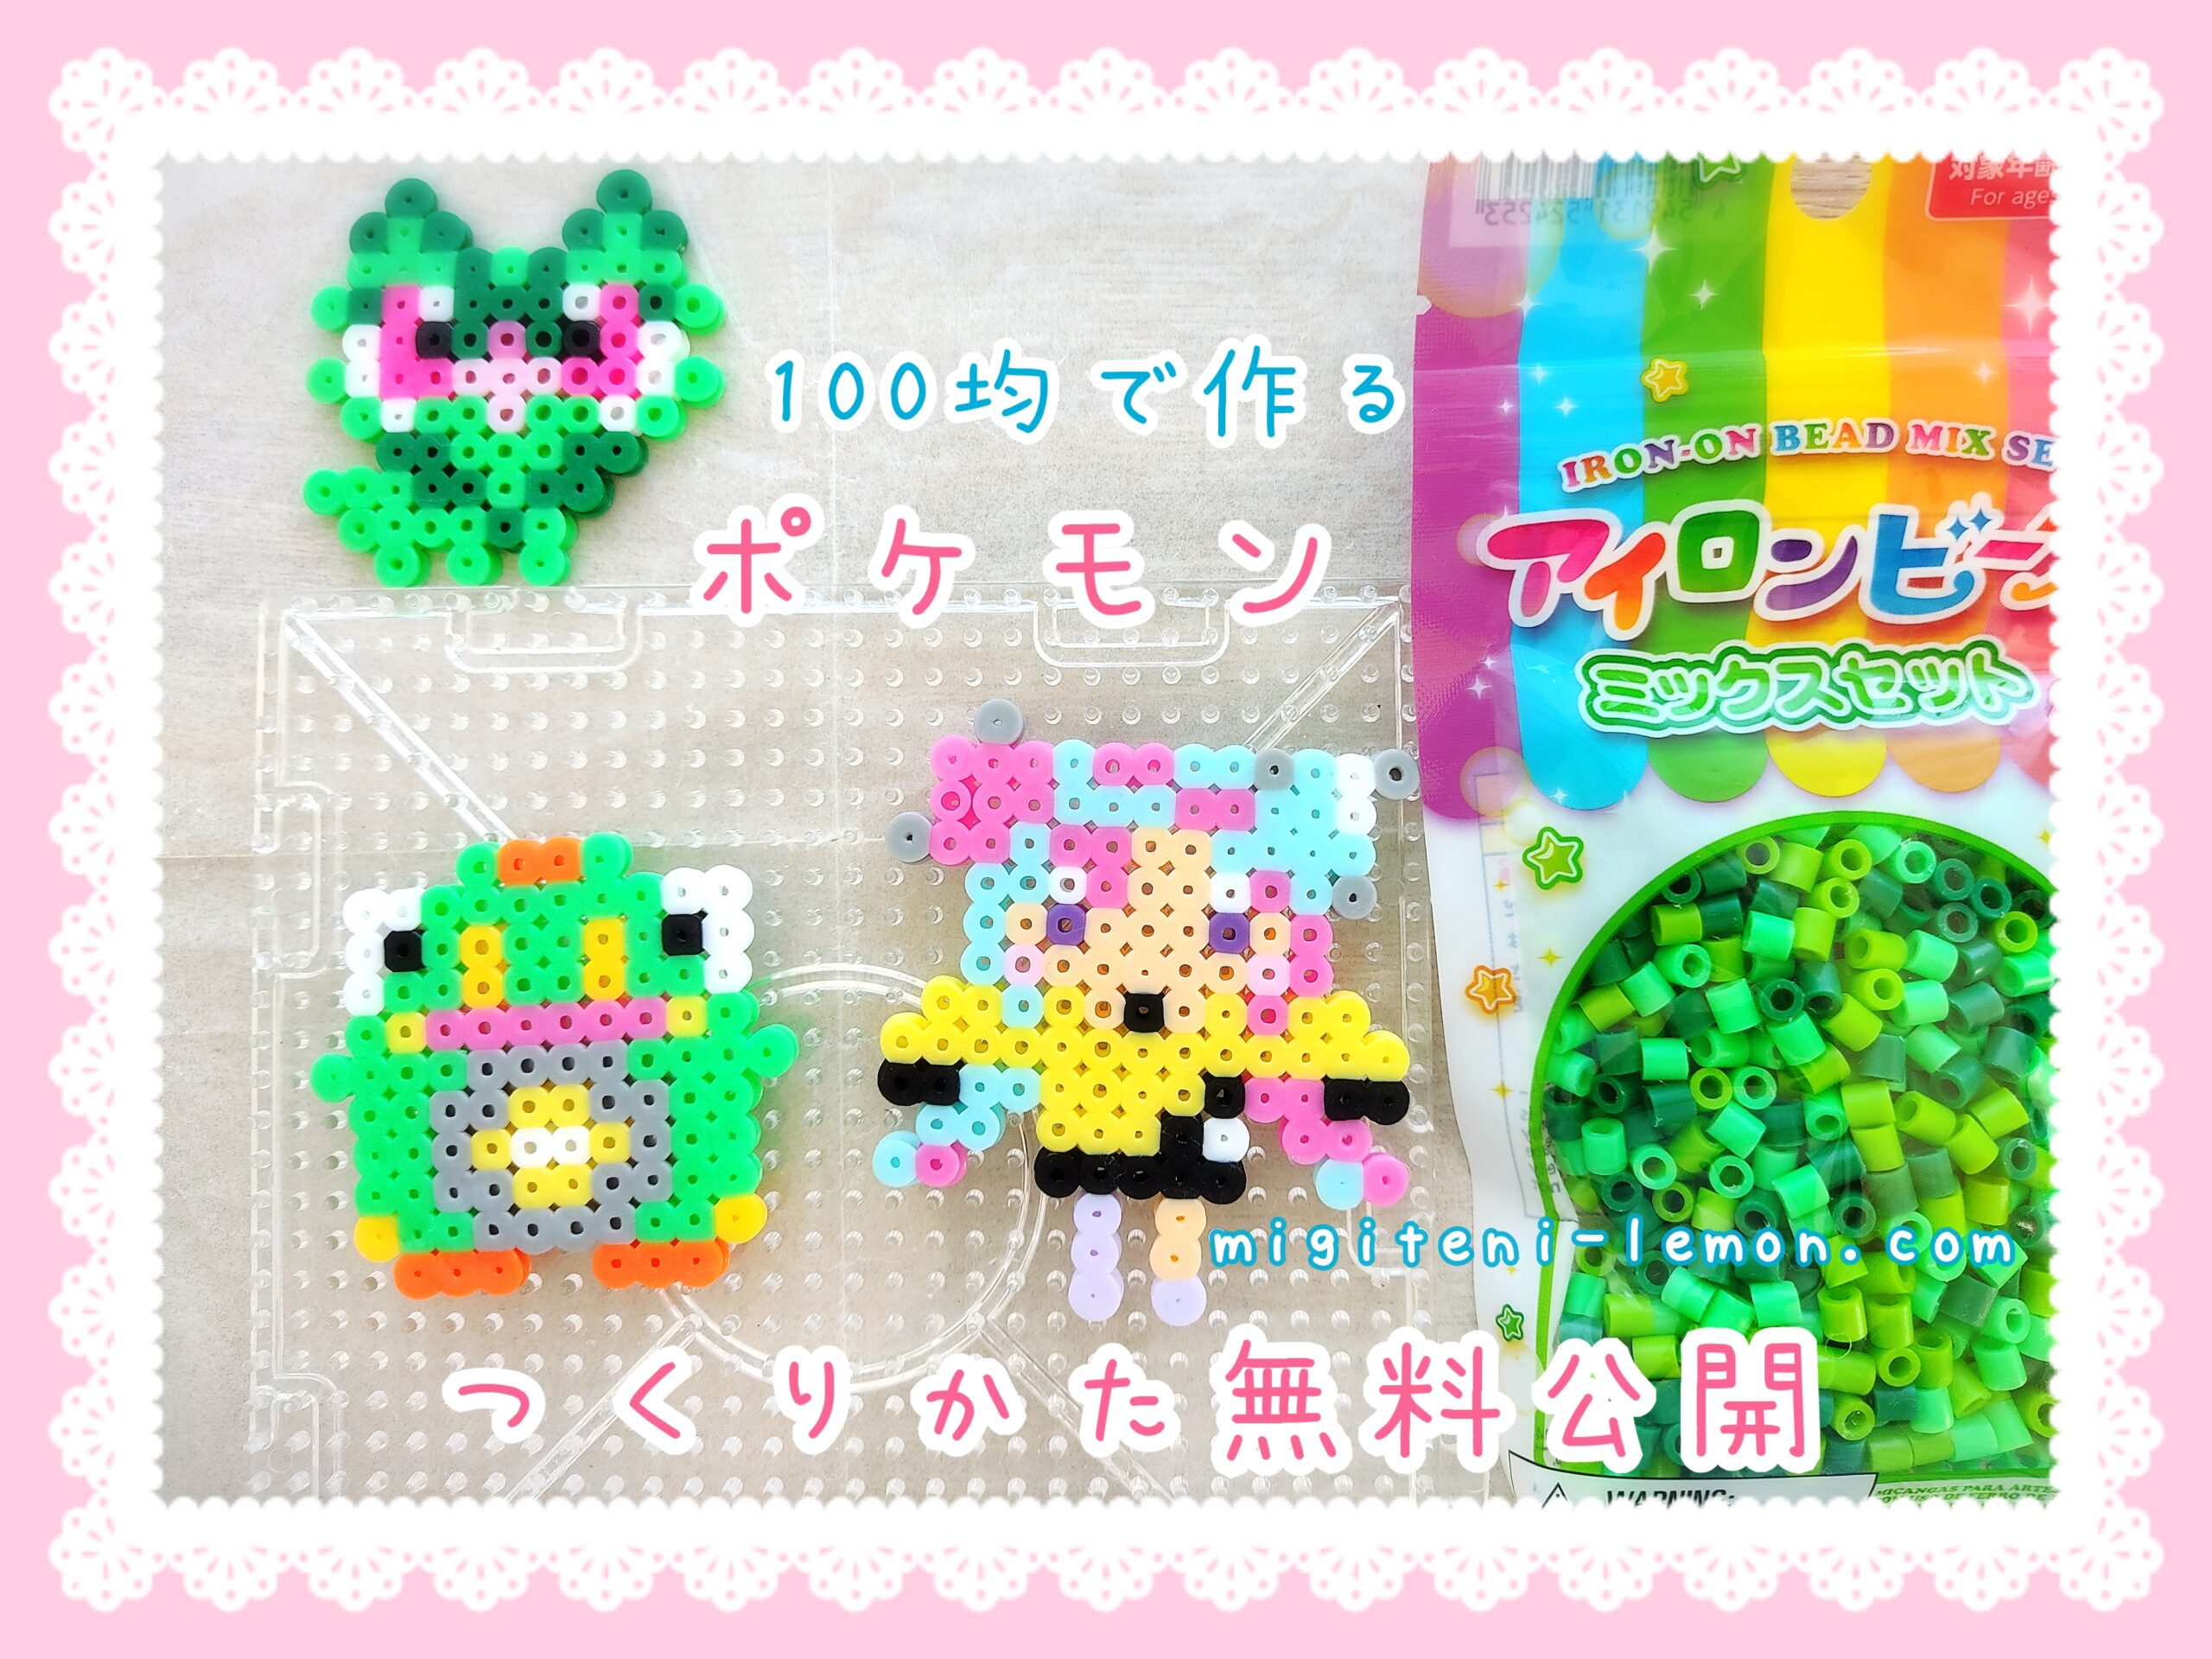 nanjamo-iono-harbarii-bellibolt-pokemon-beads-zuan